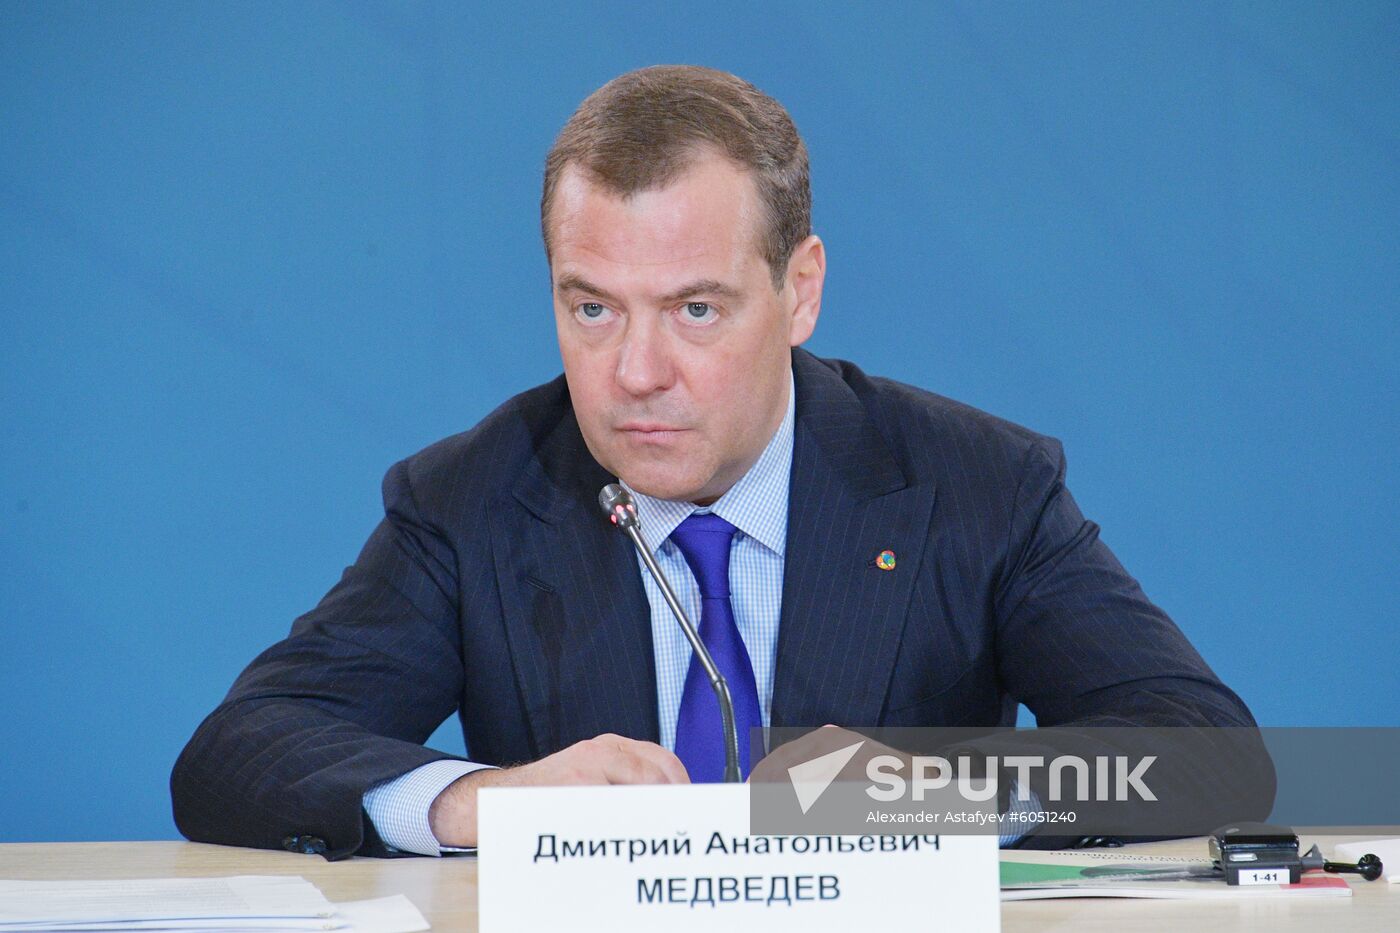 Russia Medvedev Skolkovo